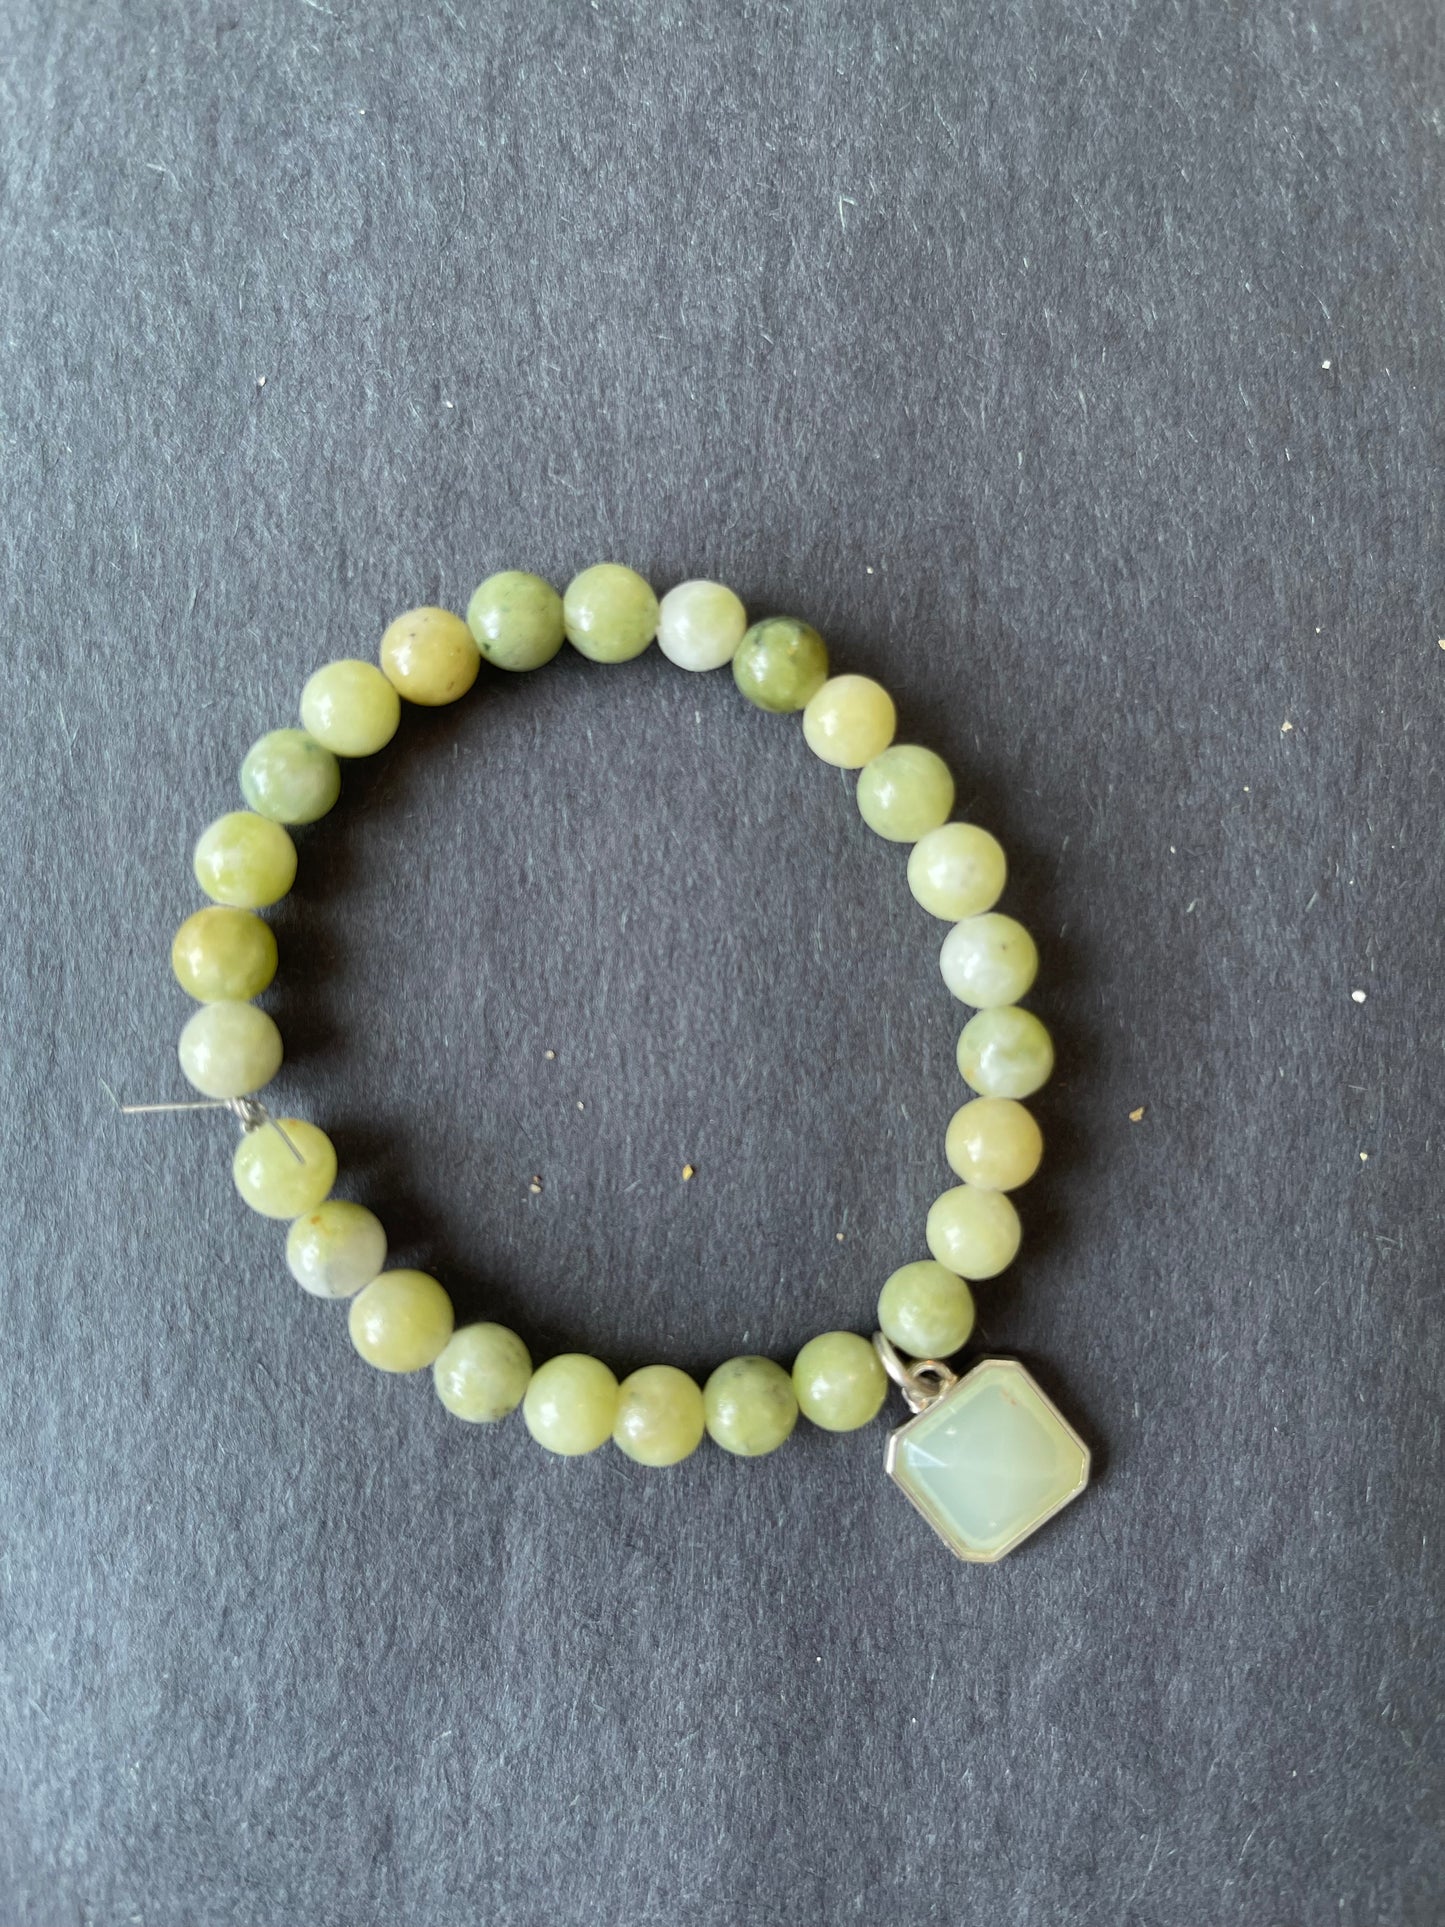 The Jade Bracelet